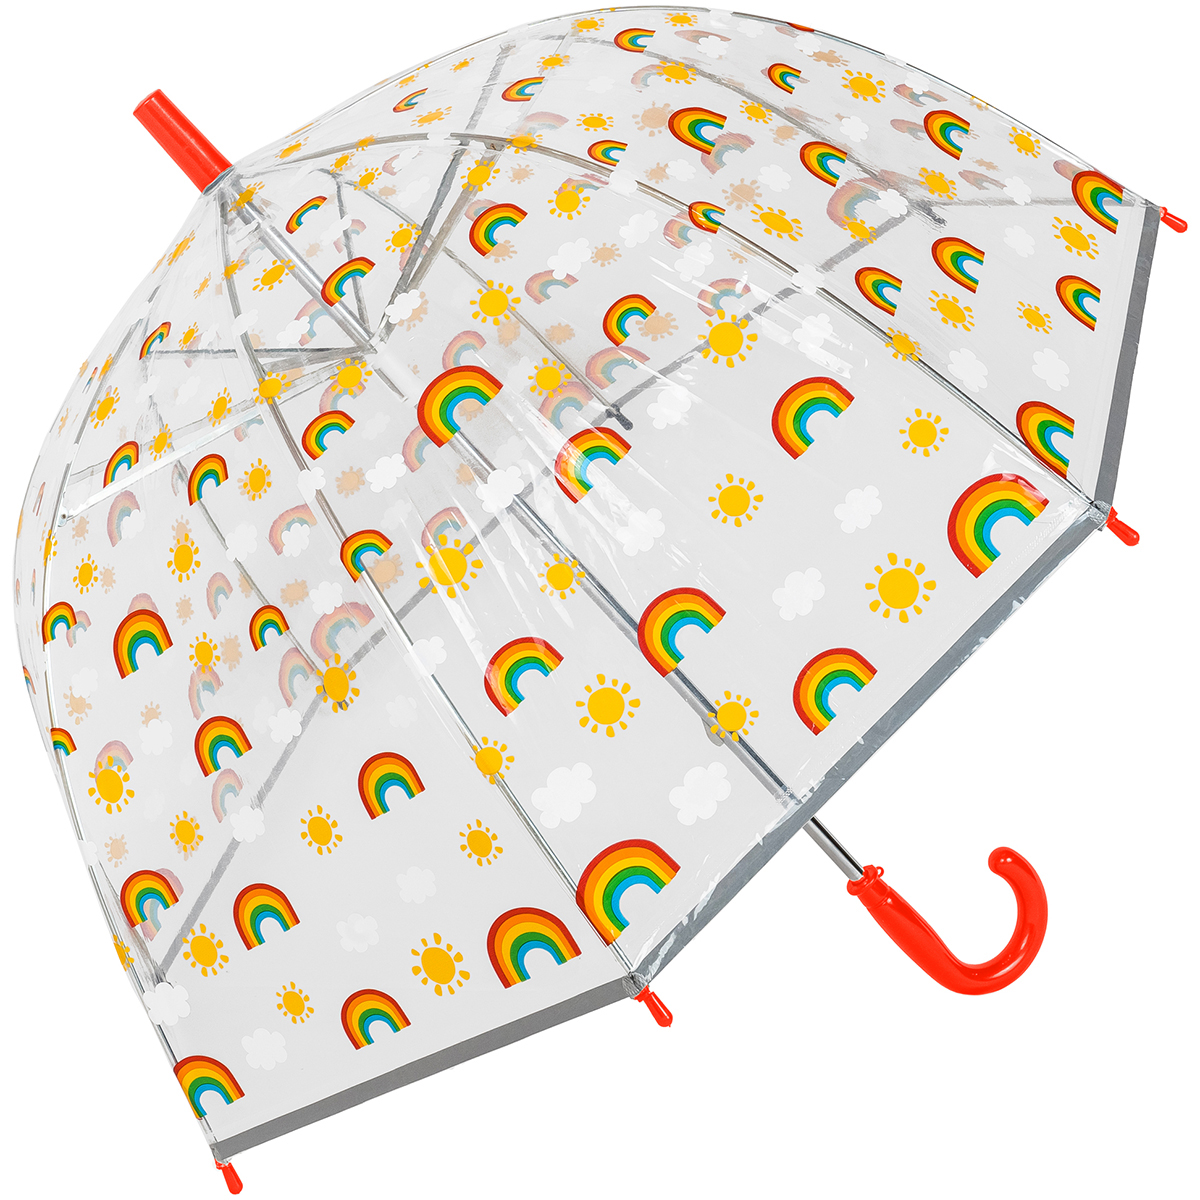 Susino Children's See-Through Dome Umbrella - Rainbows (with Red Handle)